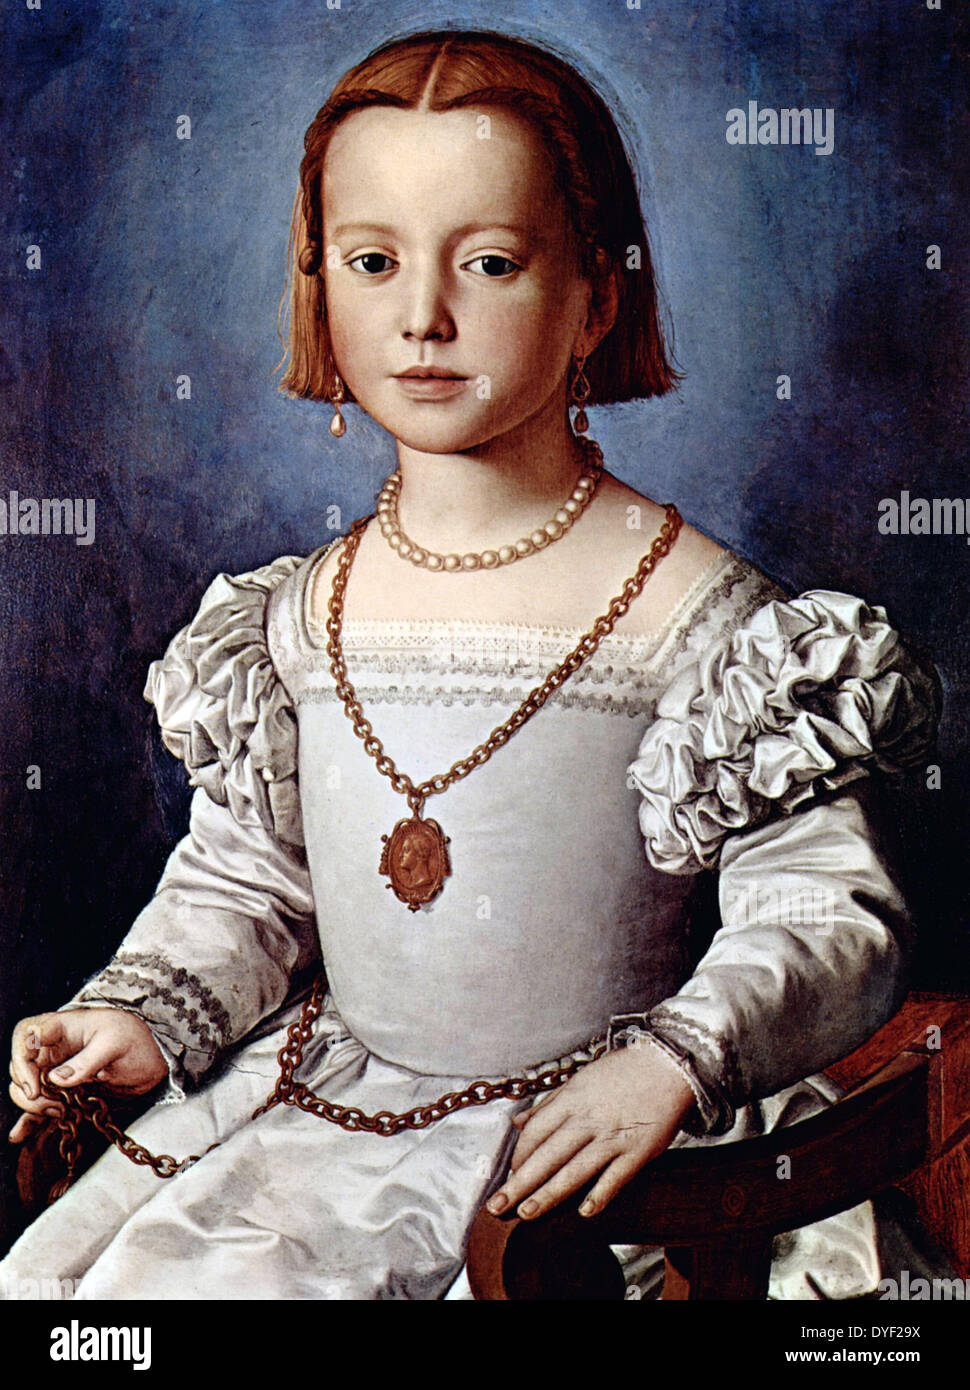 Bianca de Médici by Agnolo di Cosimo Bronzino (1503 – 1572), Agnolo Bronzino was an Italian Mannerist painter from Florence. Stock Photo